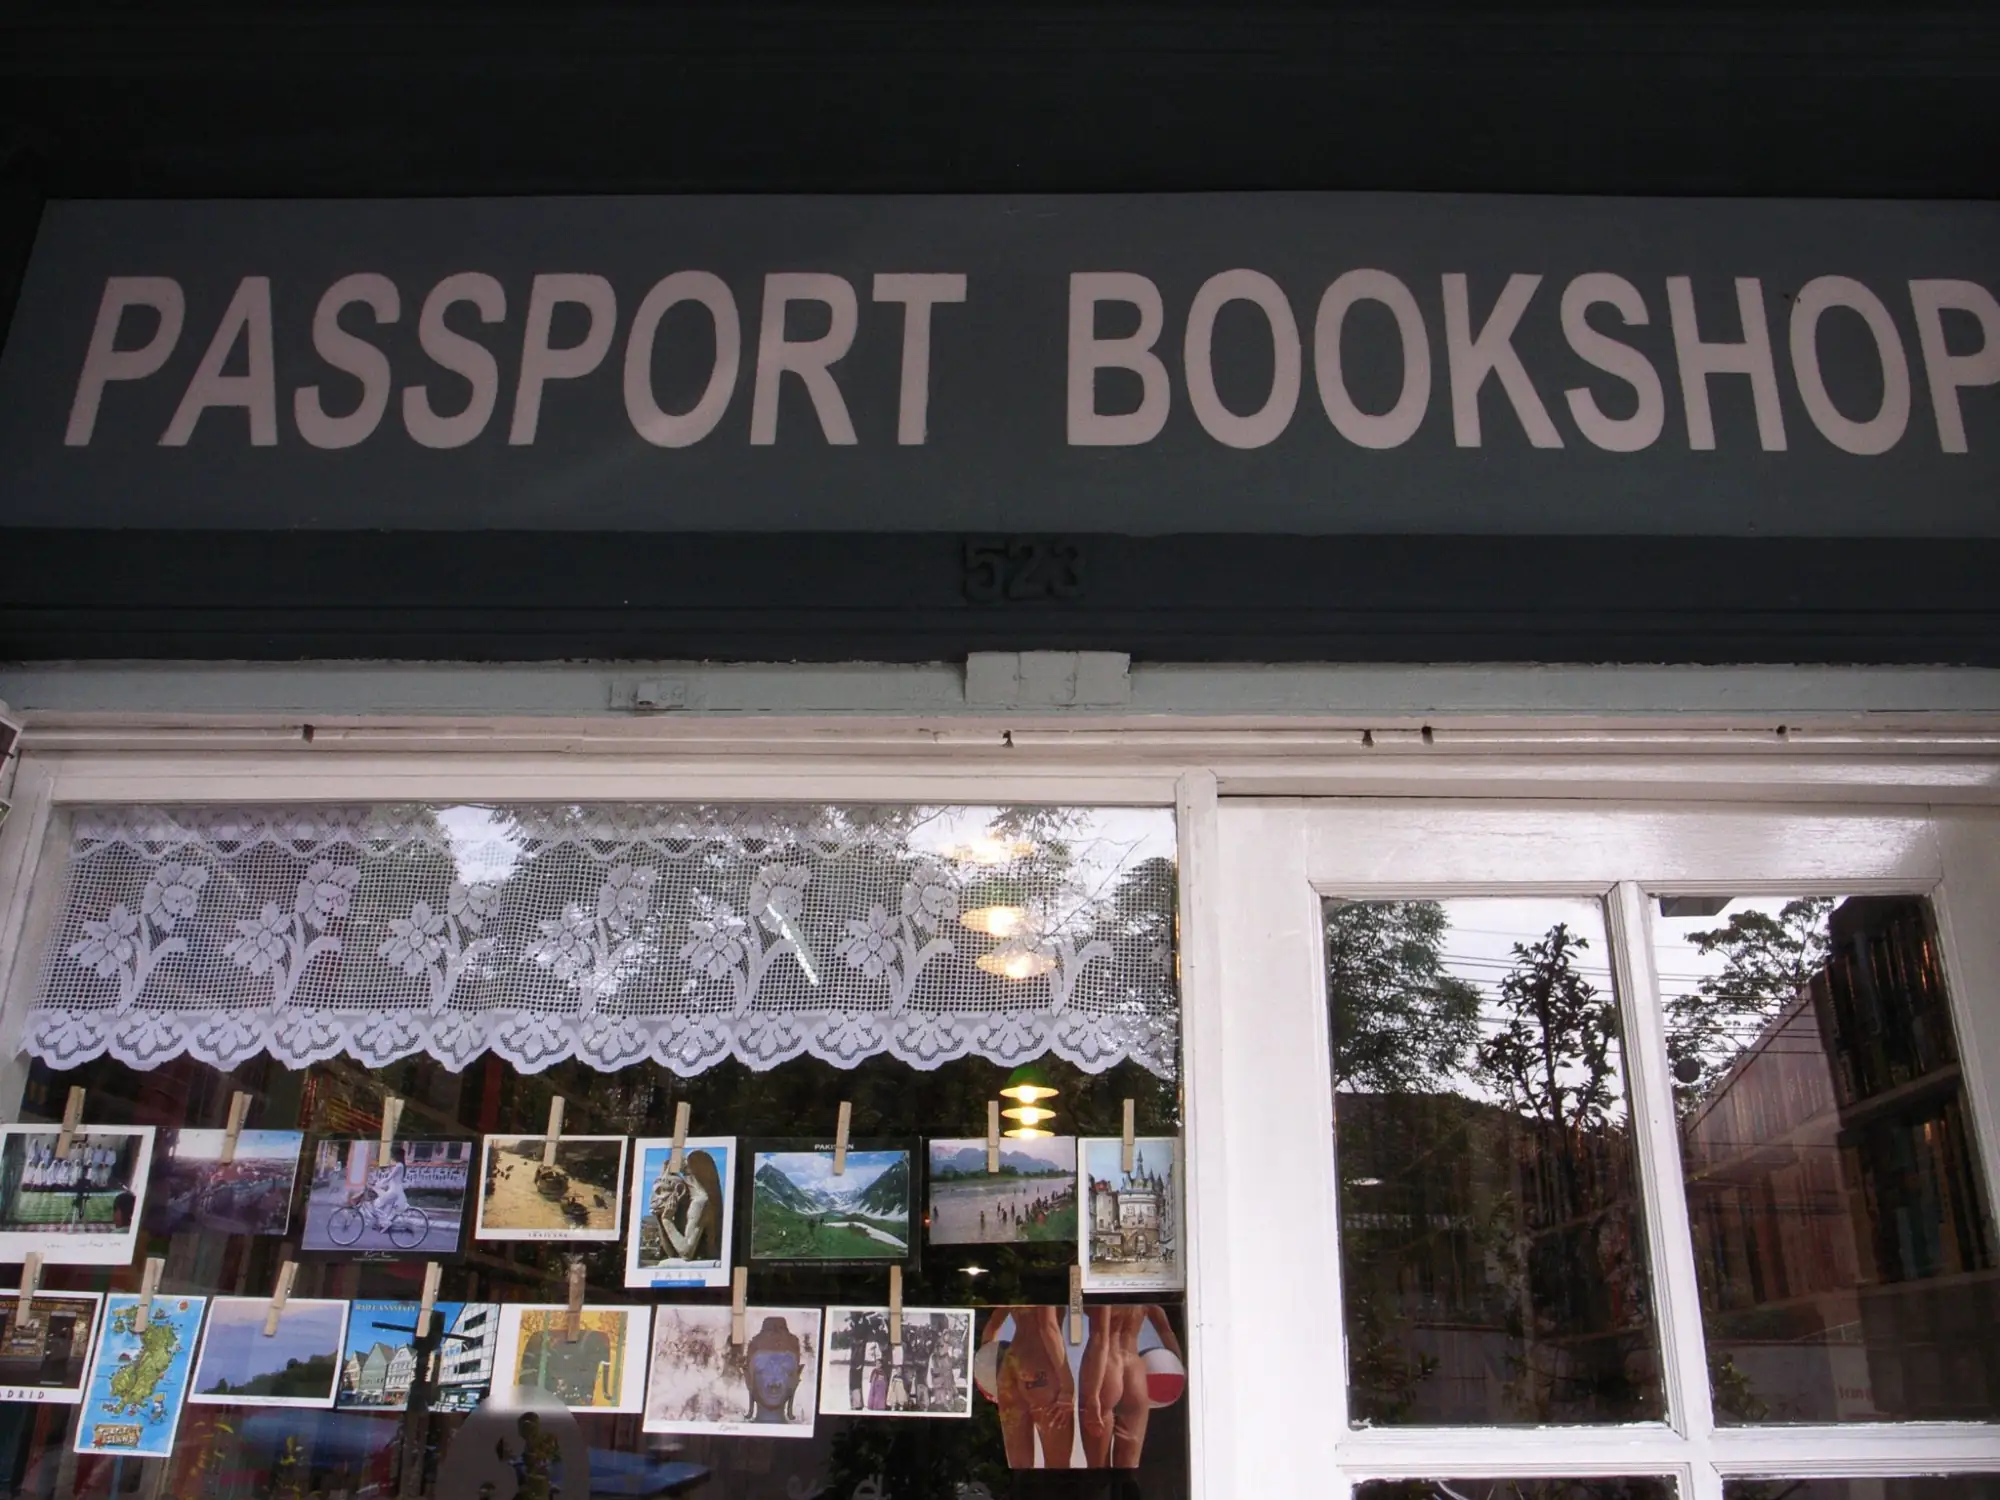 Passport Bookshop空间相对狭窄，共有两层，在书店的各个角落都放满了书籍，从旅游攻略、纪实小说和摄影写真等（图片来源：脸书@YoNoom Passportbookshop）